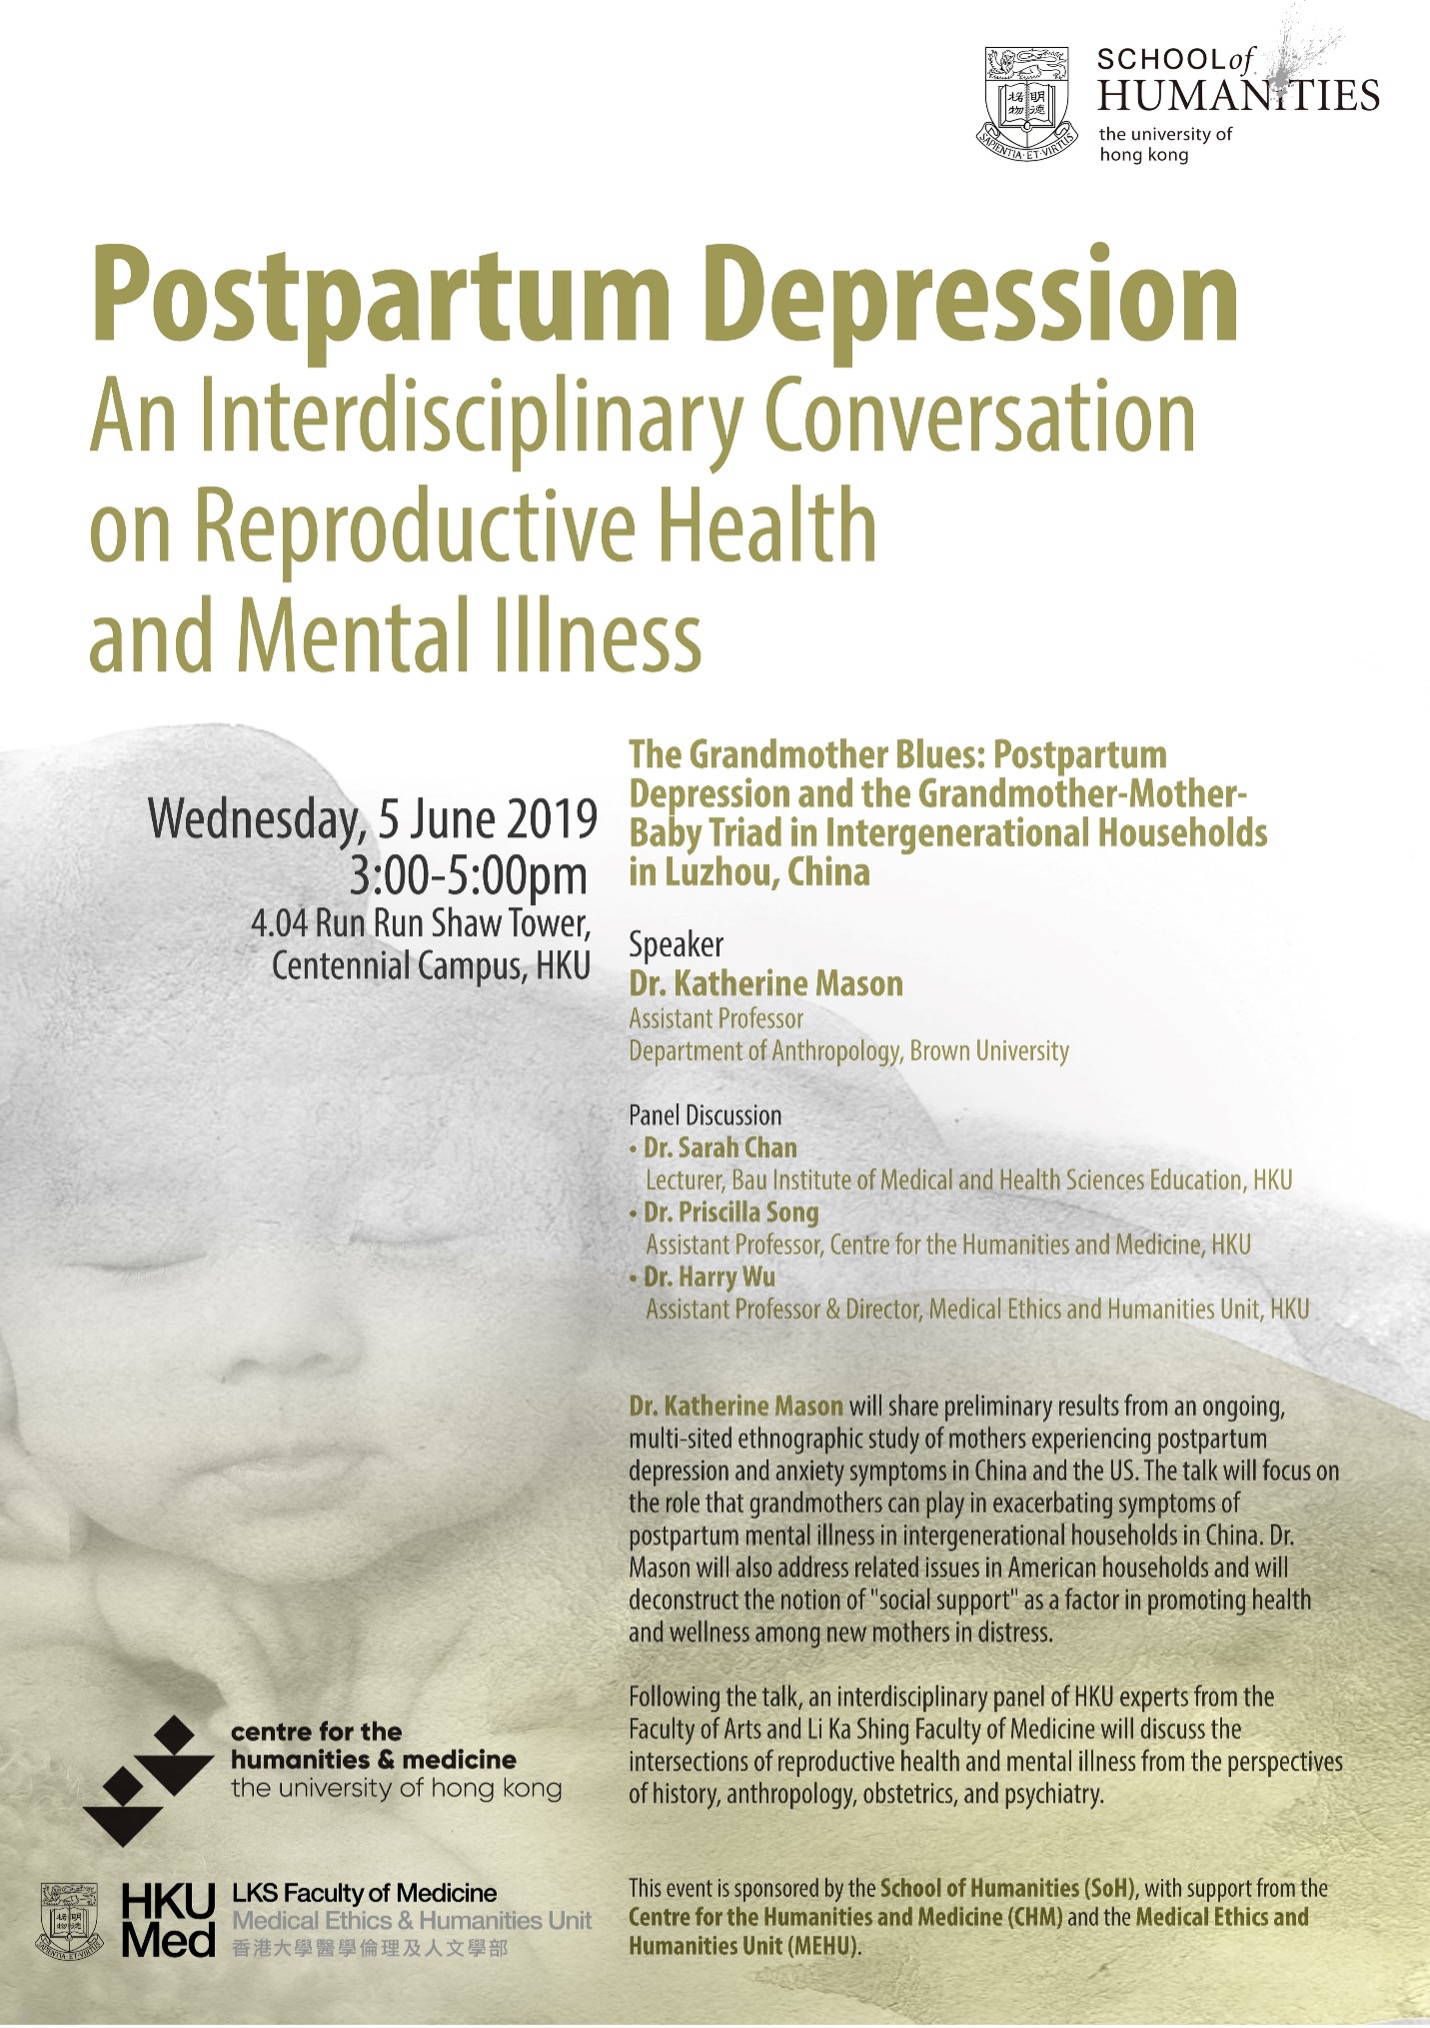 Postpartum Depression: An Interdisciplinary Conversation on Reproductive Health and Mental Illness